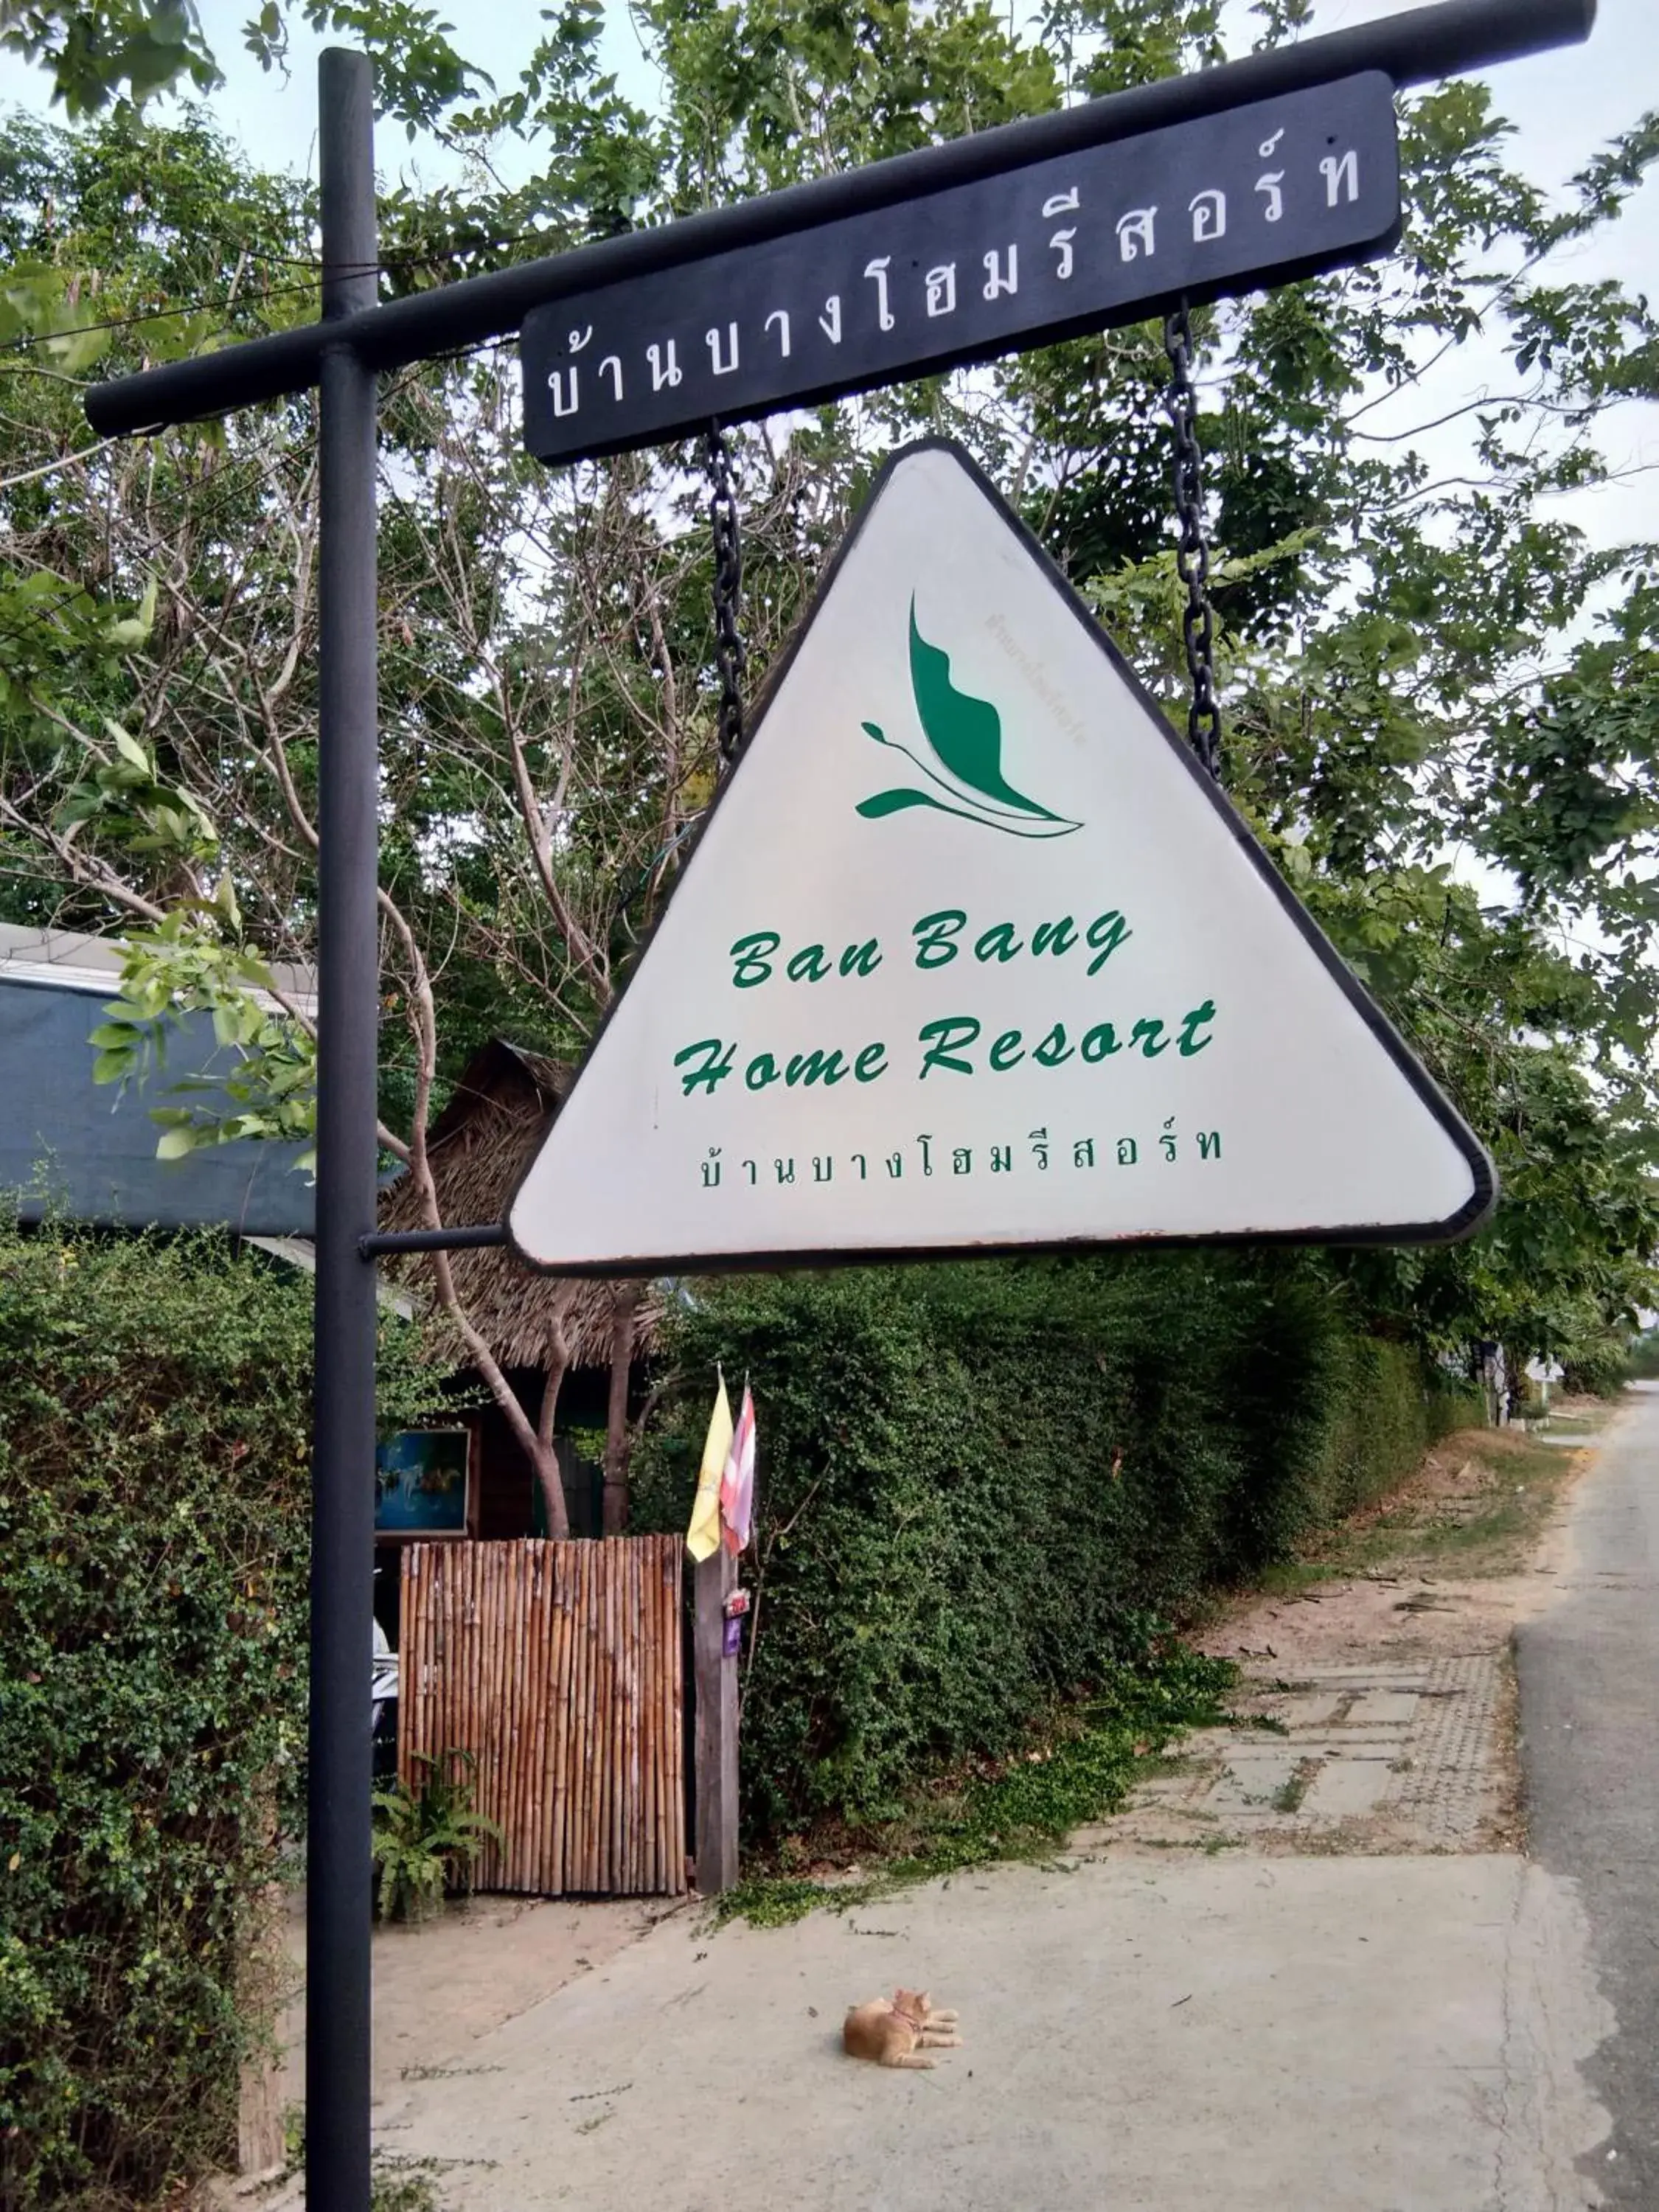 Property logo or sign in Ban Bang Home Resort